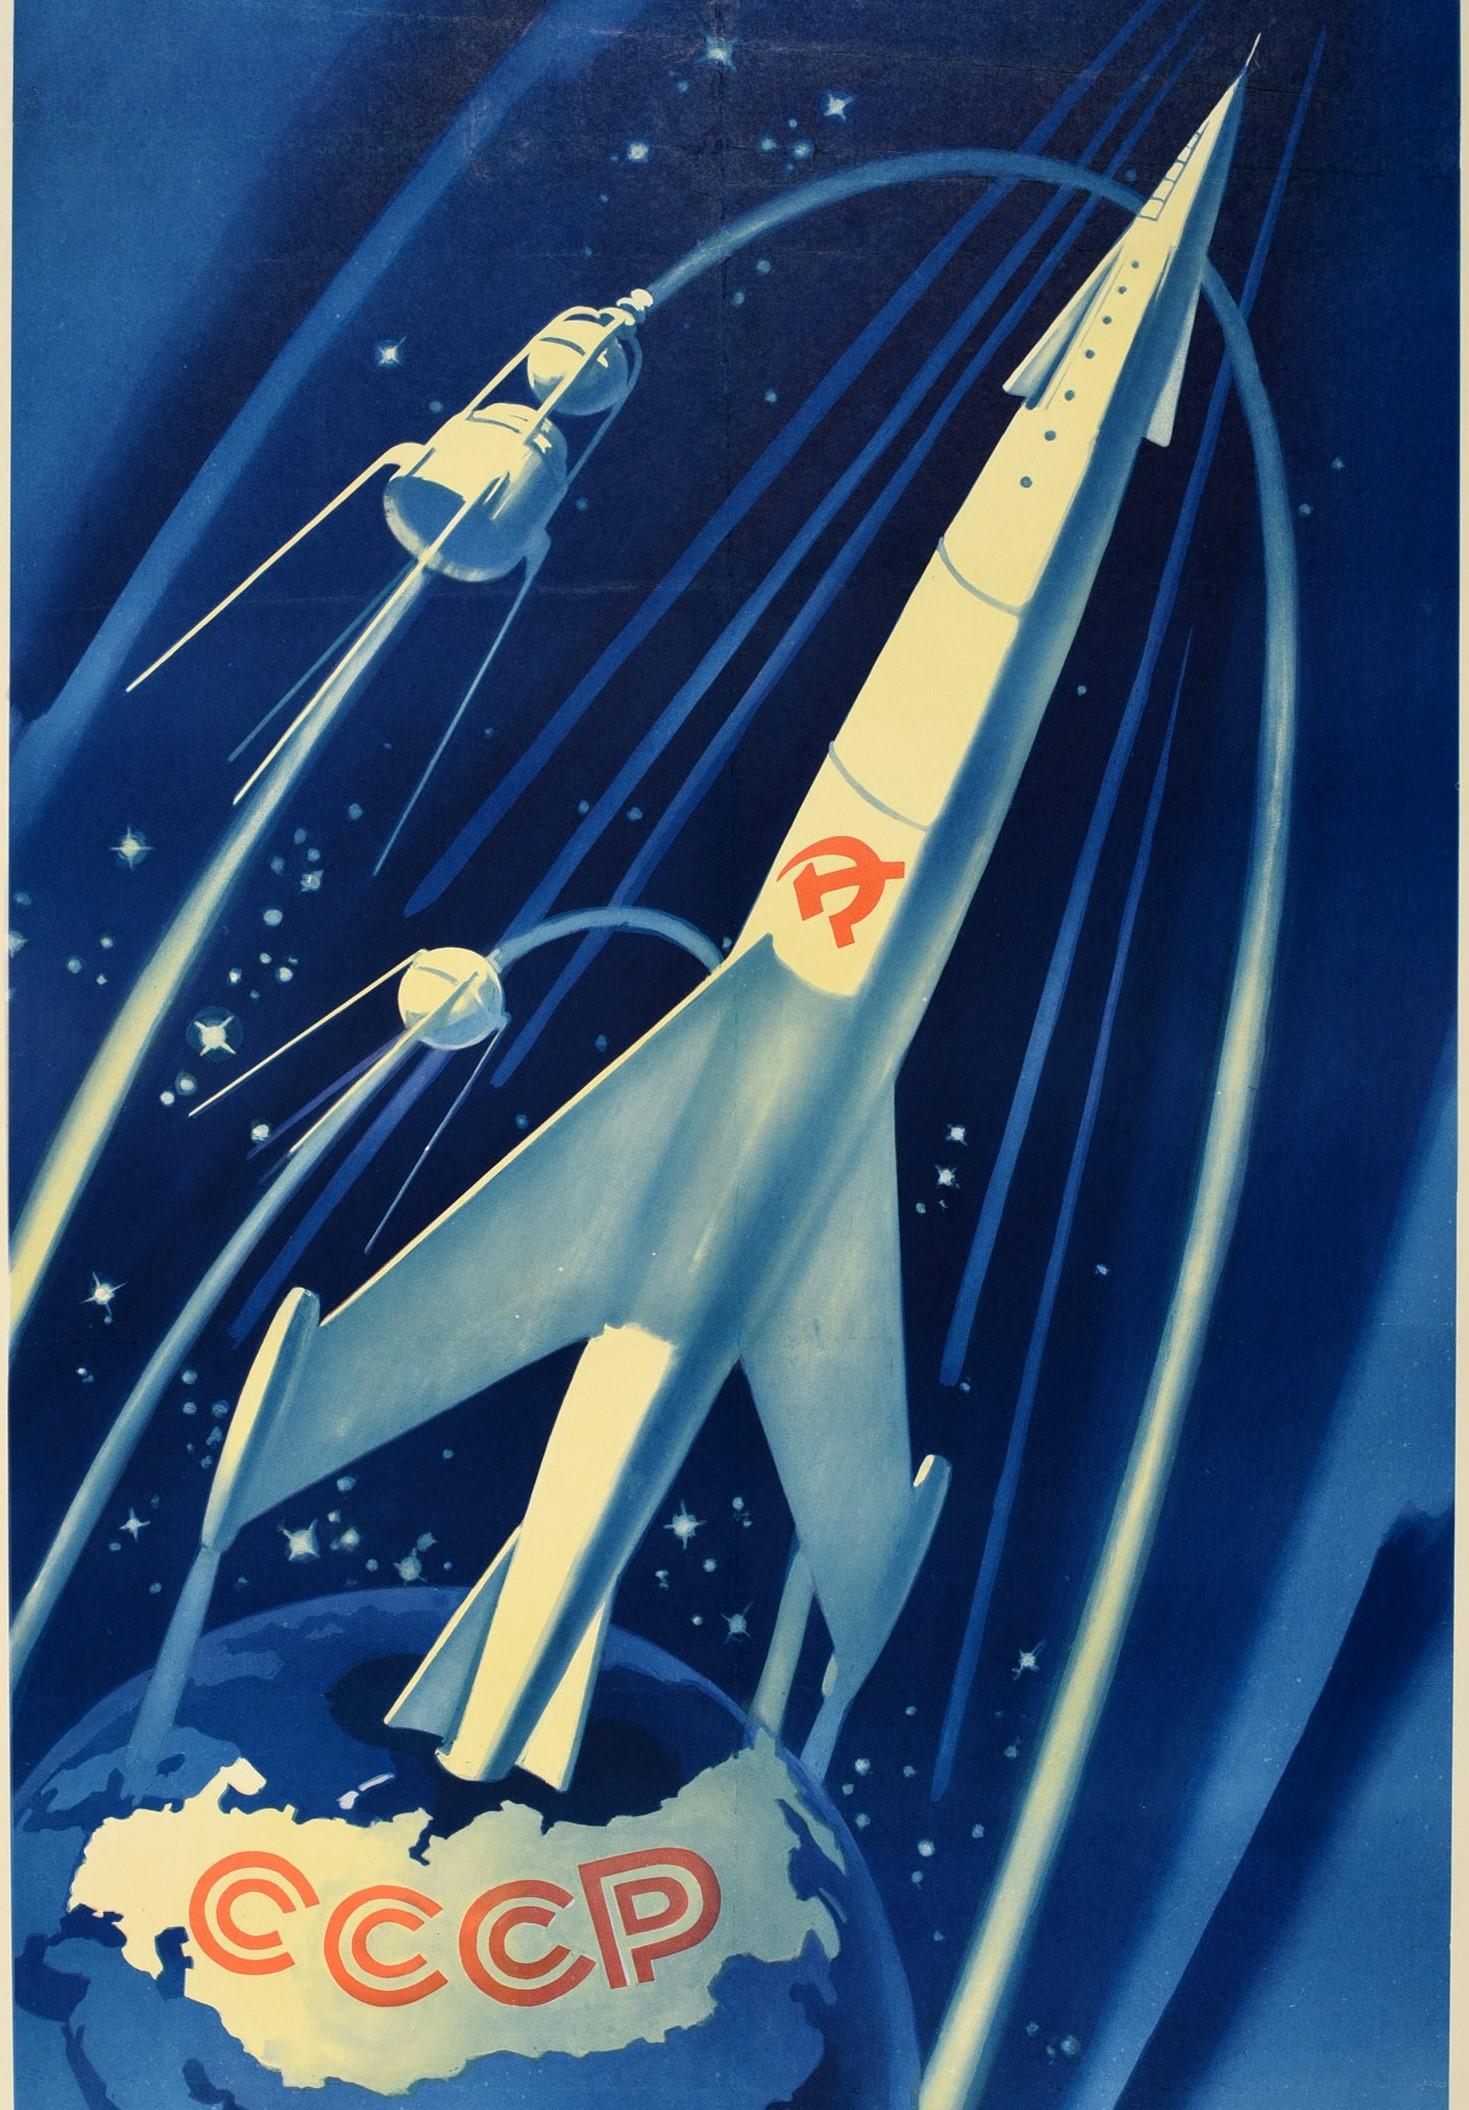 Original Vintage Poster Soviet Rocket Universe Exploration Space Race Propaganda - Print by N. Smolyak